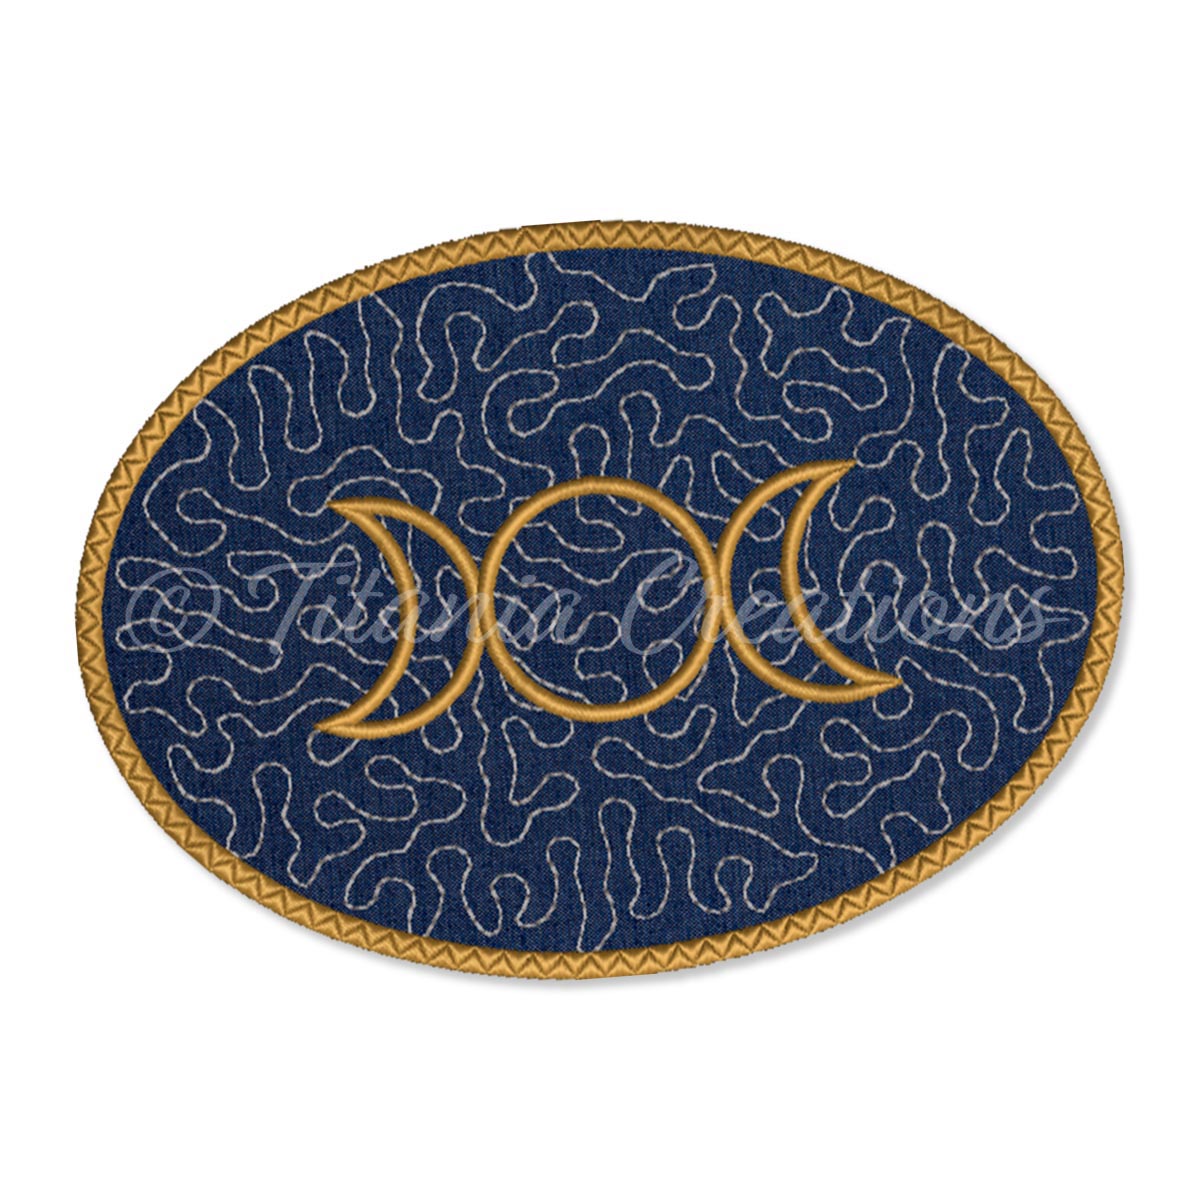 ITH Triple Goddess Oval Coaster 5x7